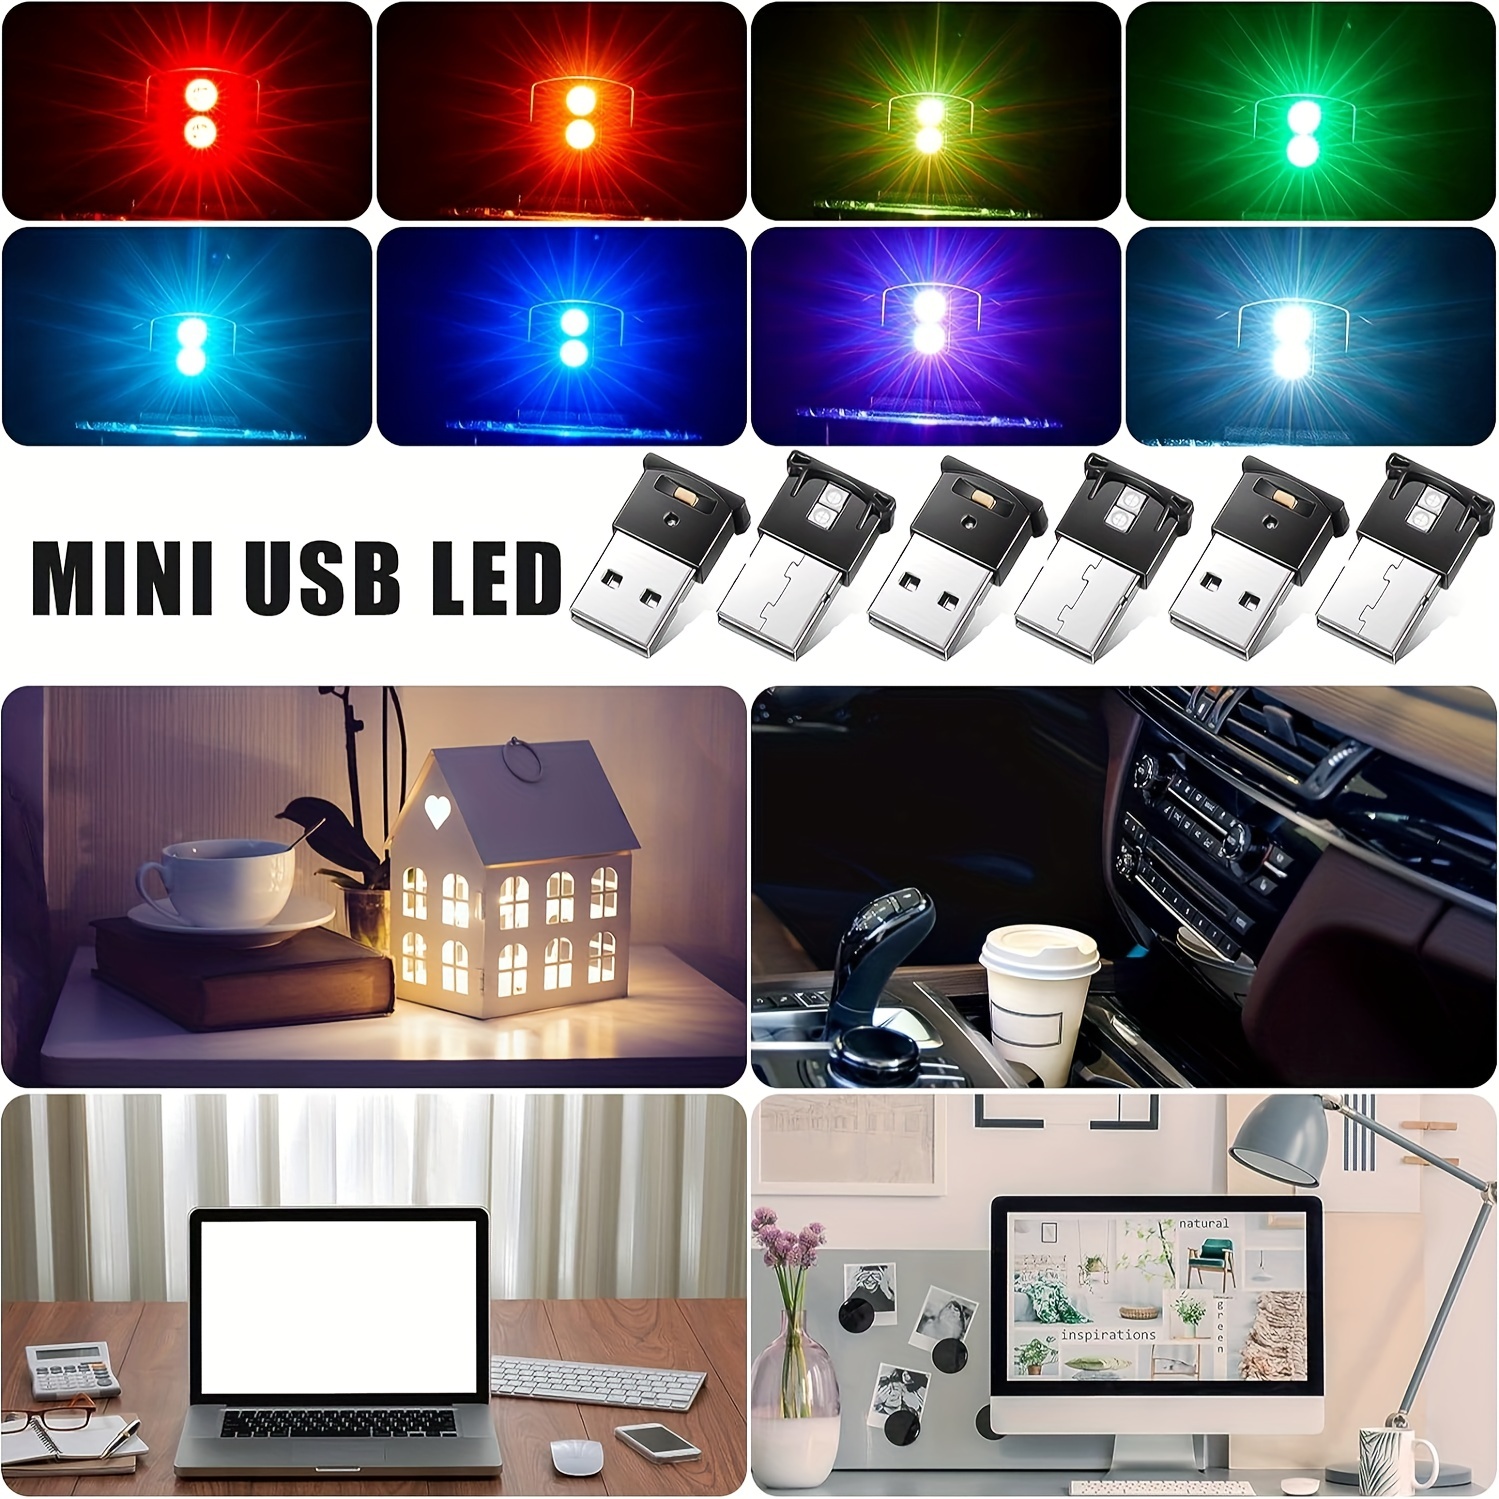 Mini USB Type-C LED Light, Illuminazione Interna RGB Per Auto LED, Luce  D'atmosfera USB Intelligente A Corrente Continua 5V, Lampada Notturna Per  La